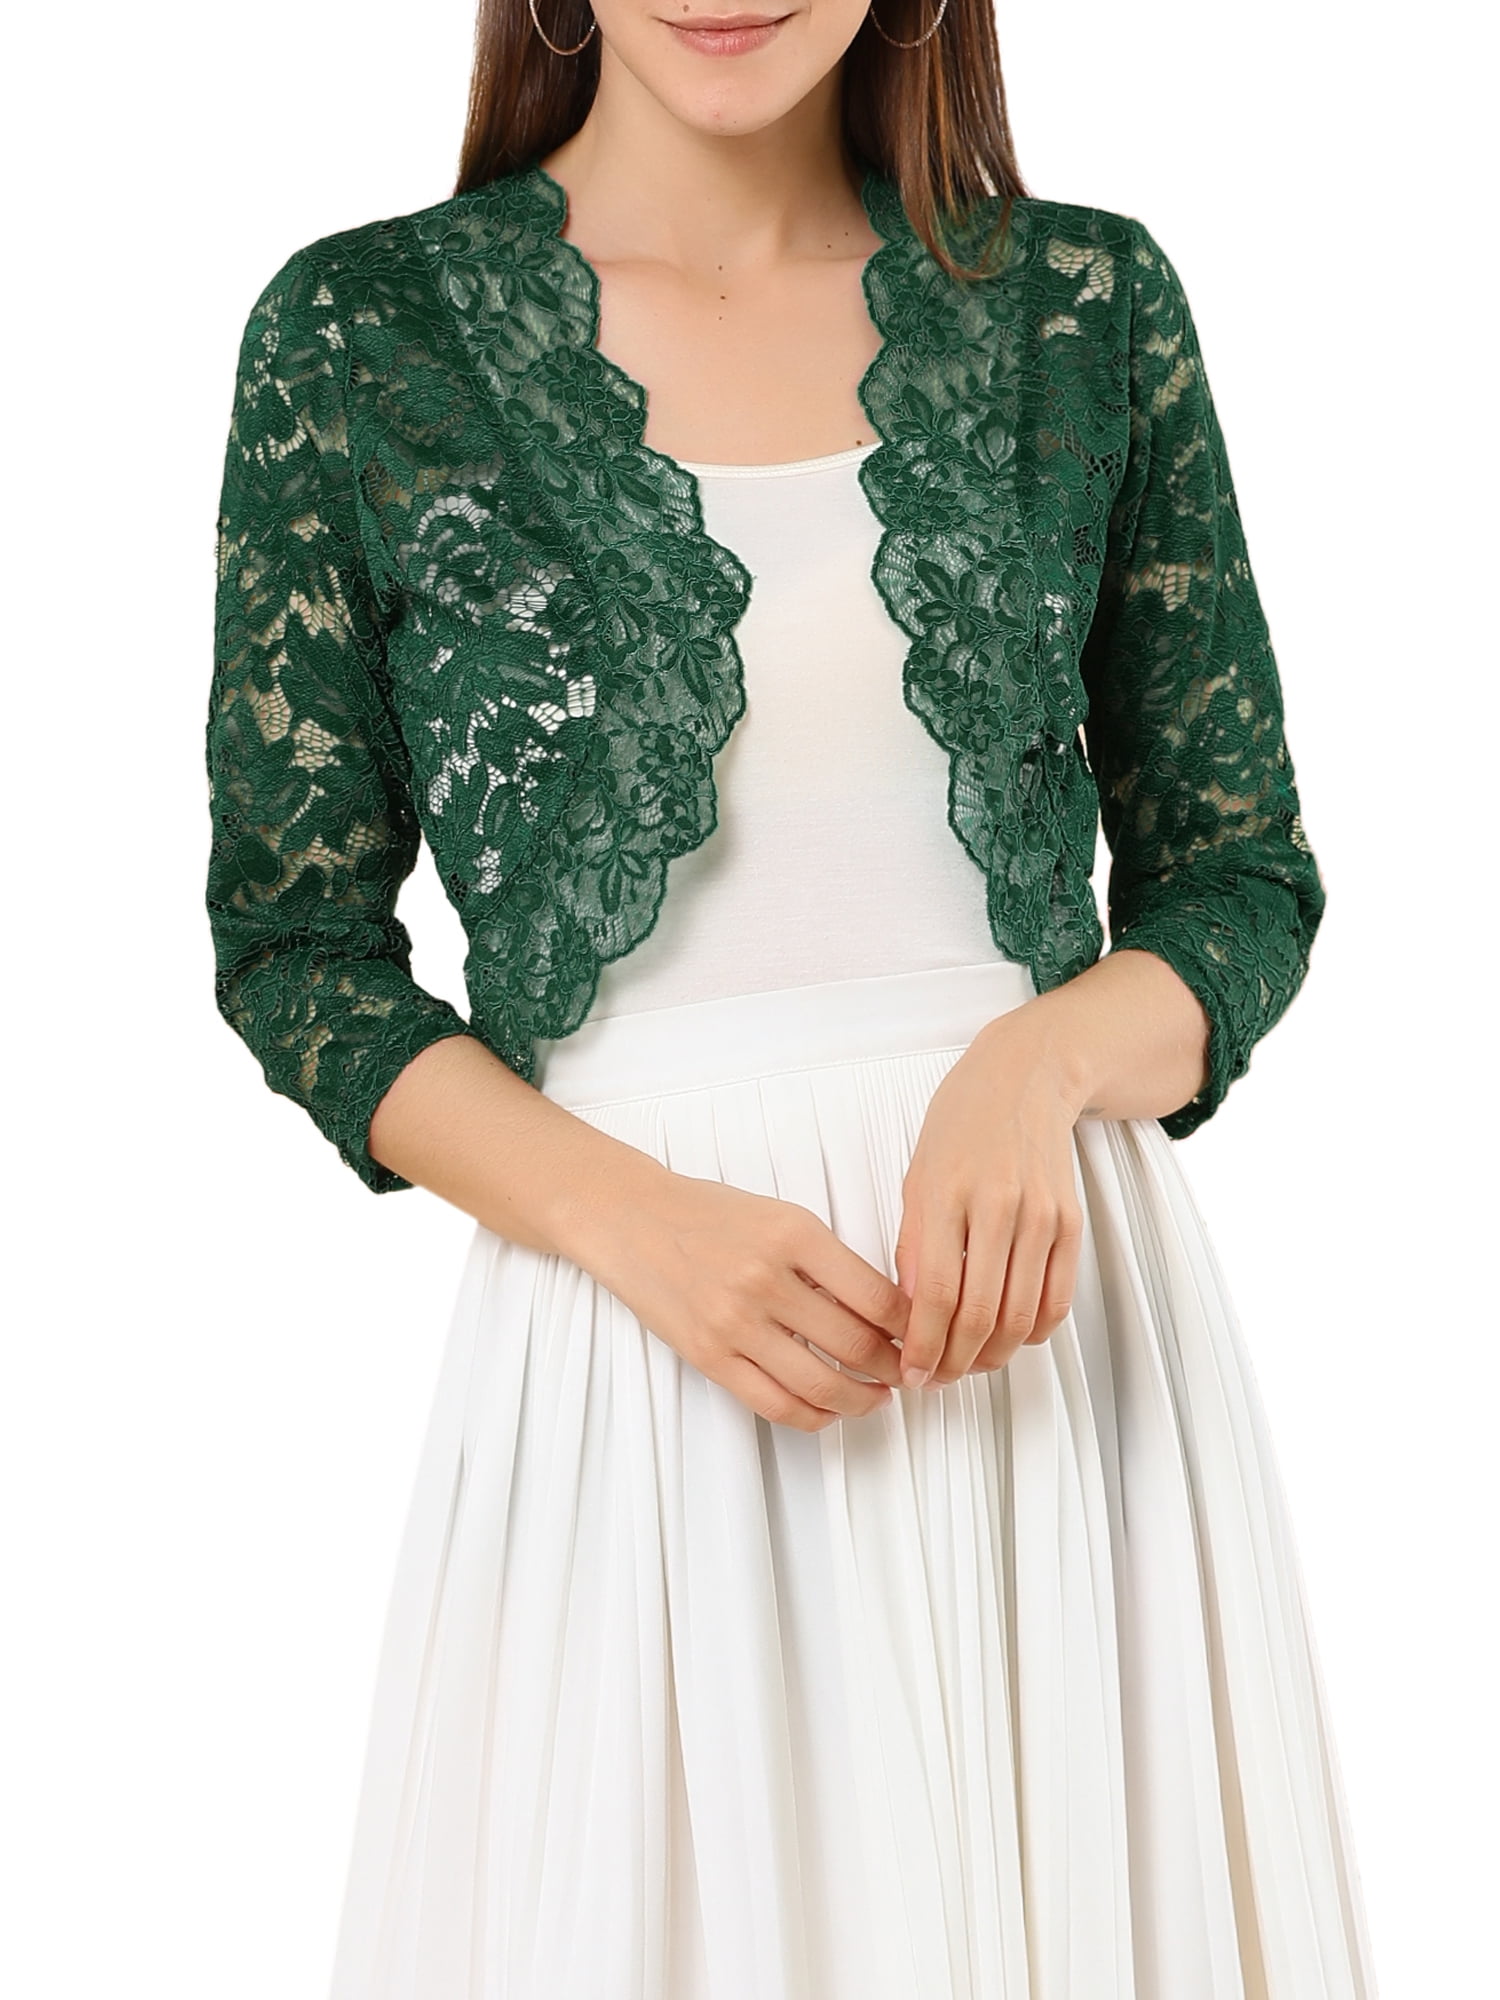 Allegra K Womens Elegant 3/4 Sleeve Sheer Floral Lace Shrug Top